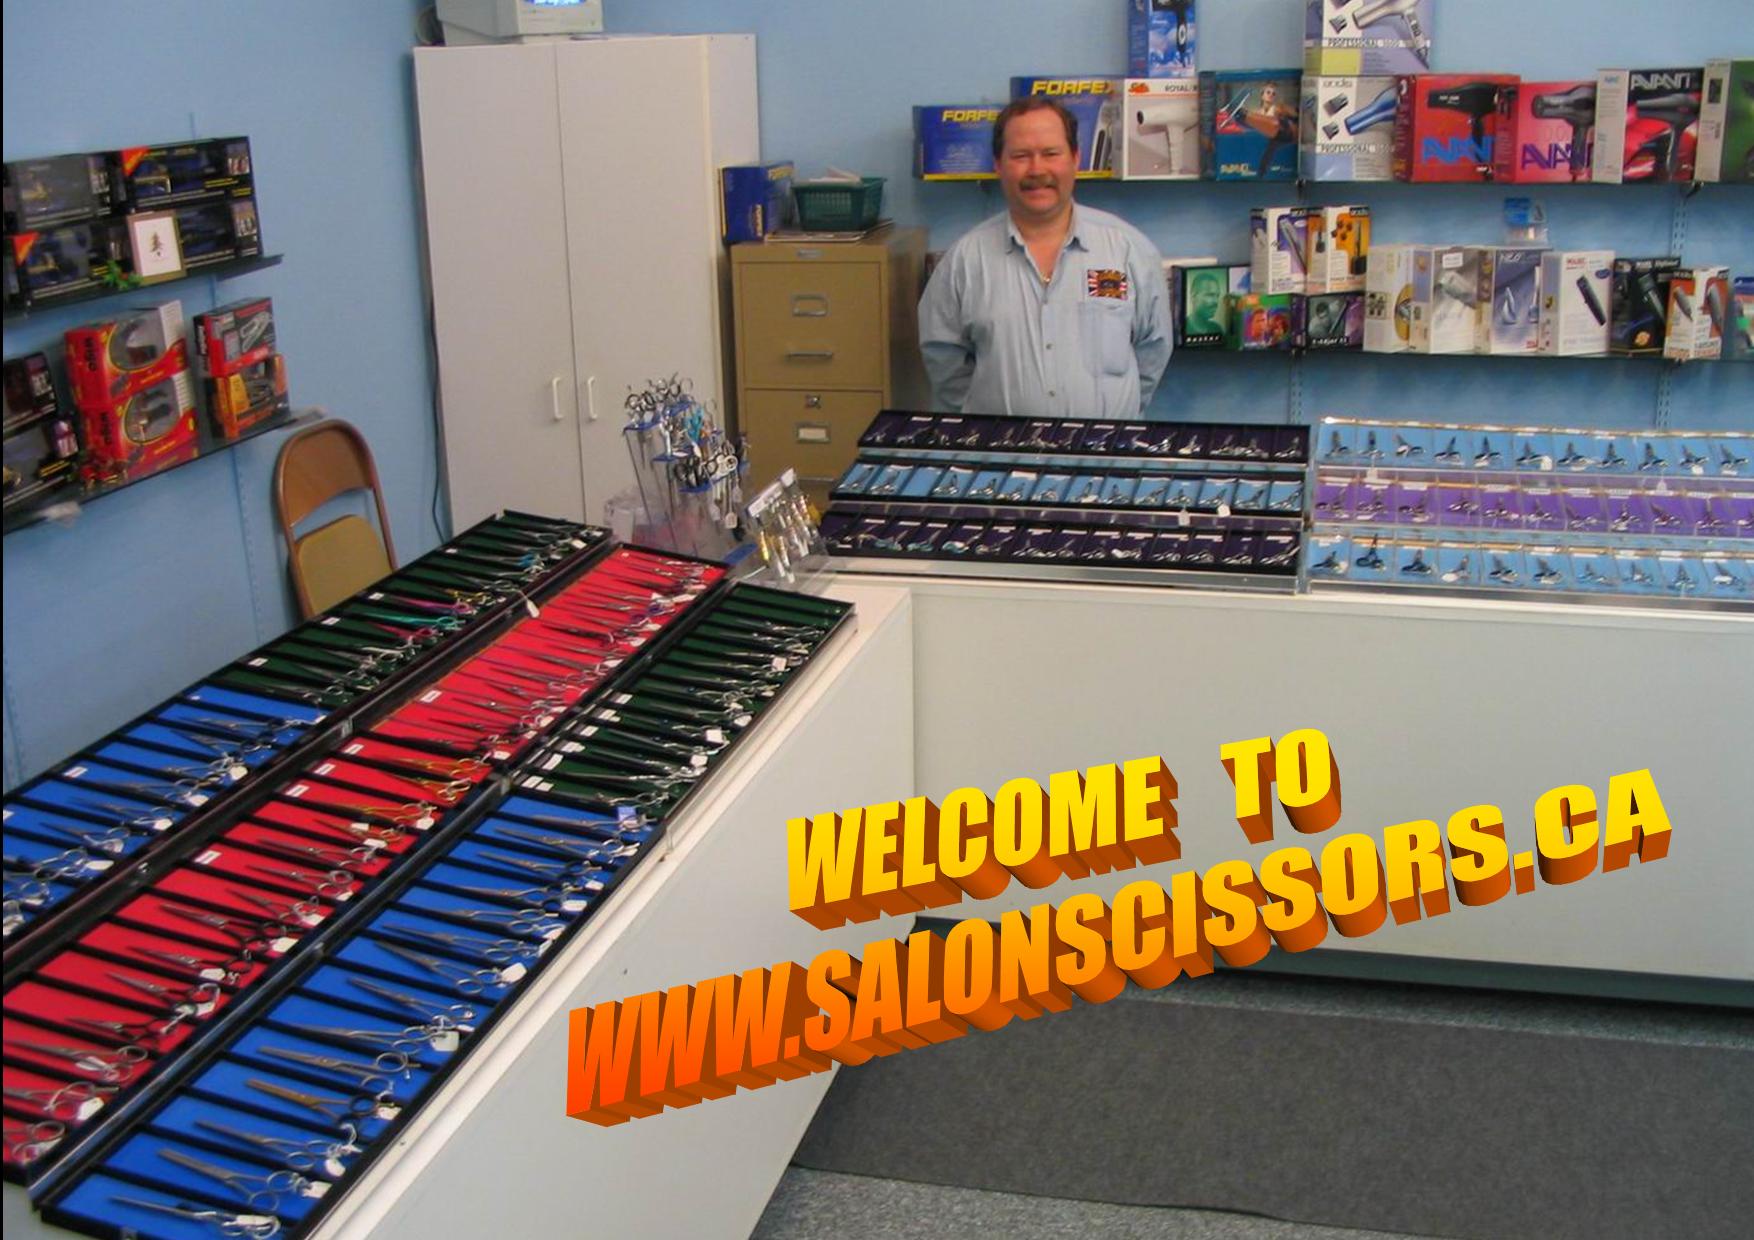 Welcome to www.SalonScissors.ca